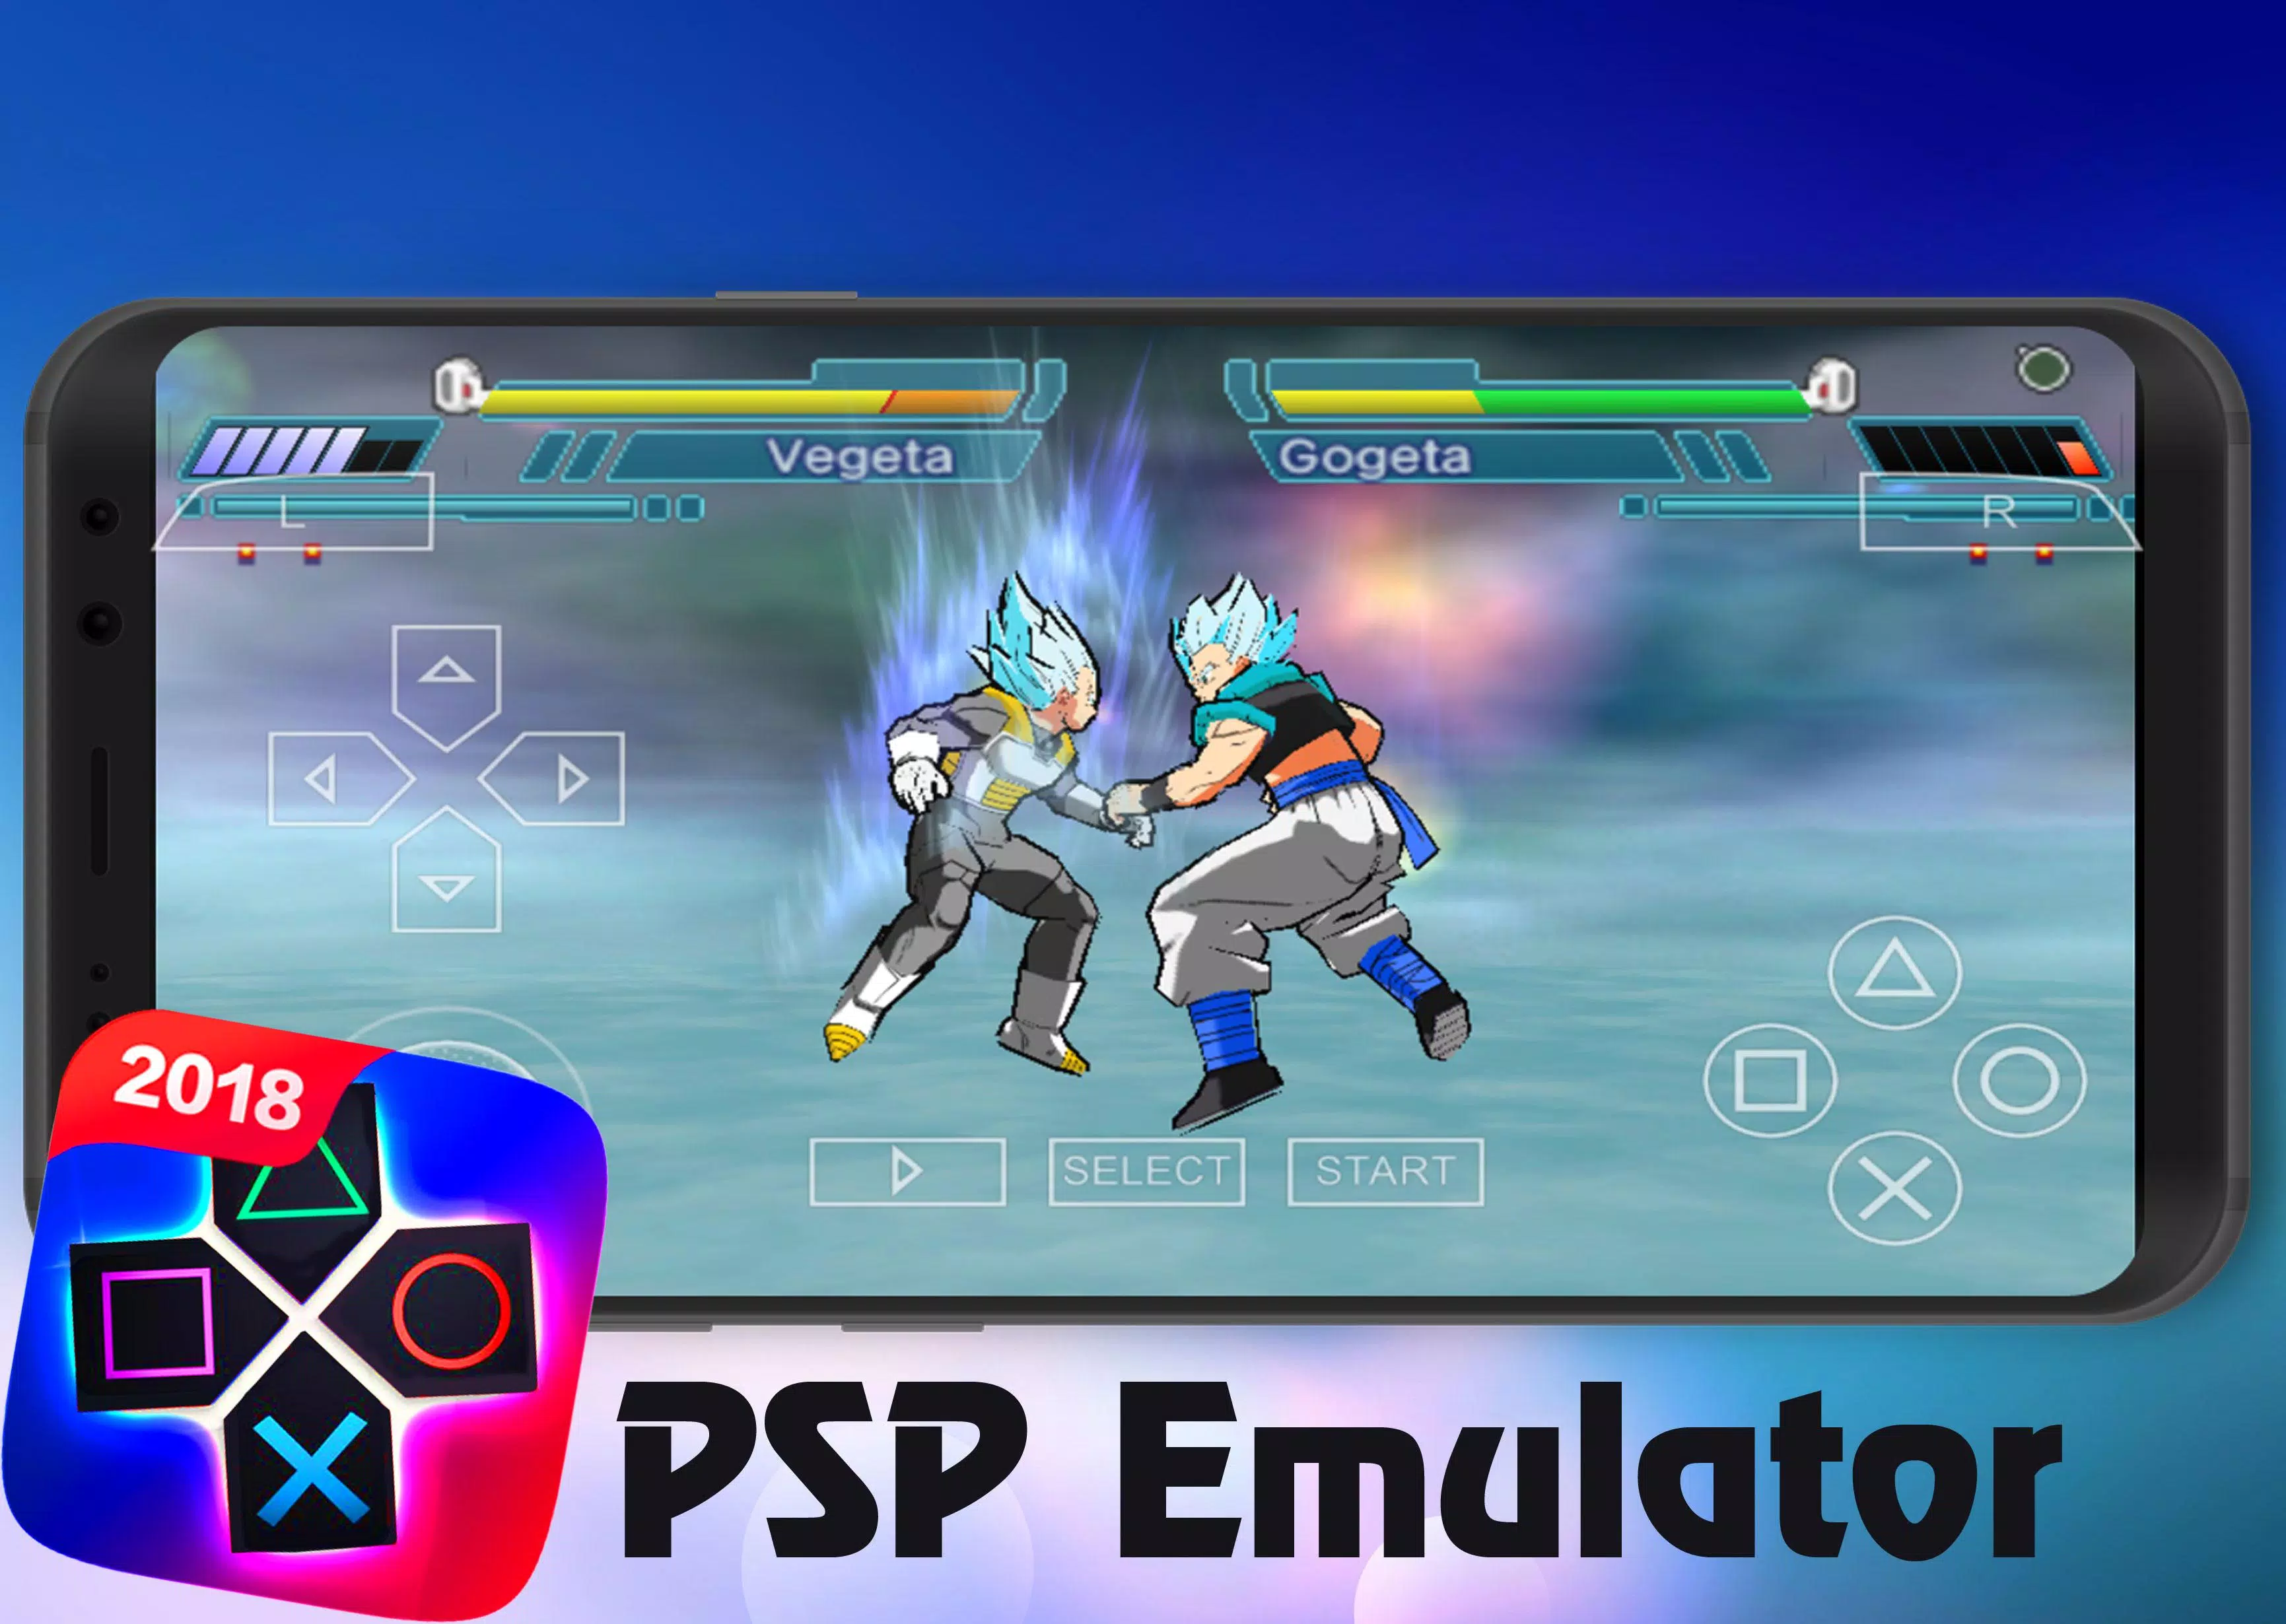 PPSSPP - PSP emulator - Download do APK para Android